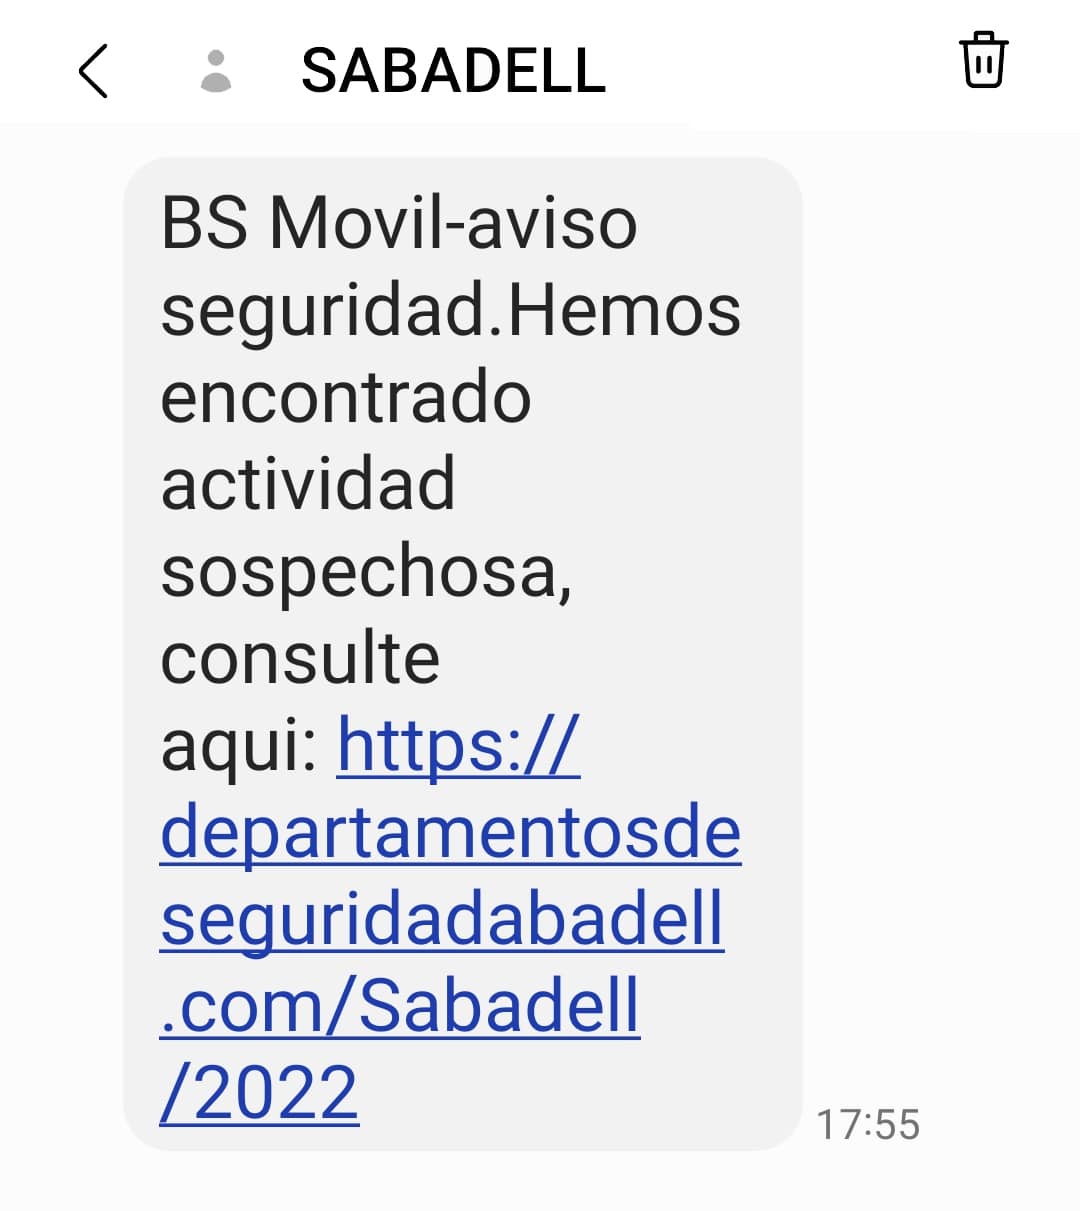 Mensaje fraudulento sobre Banco Sabadell./ Foto de Canva